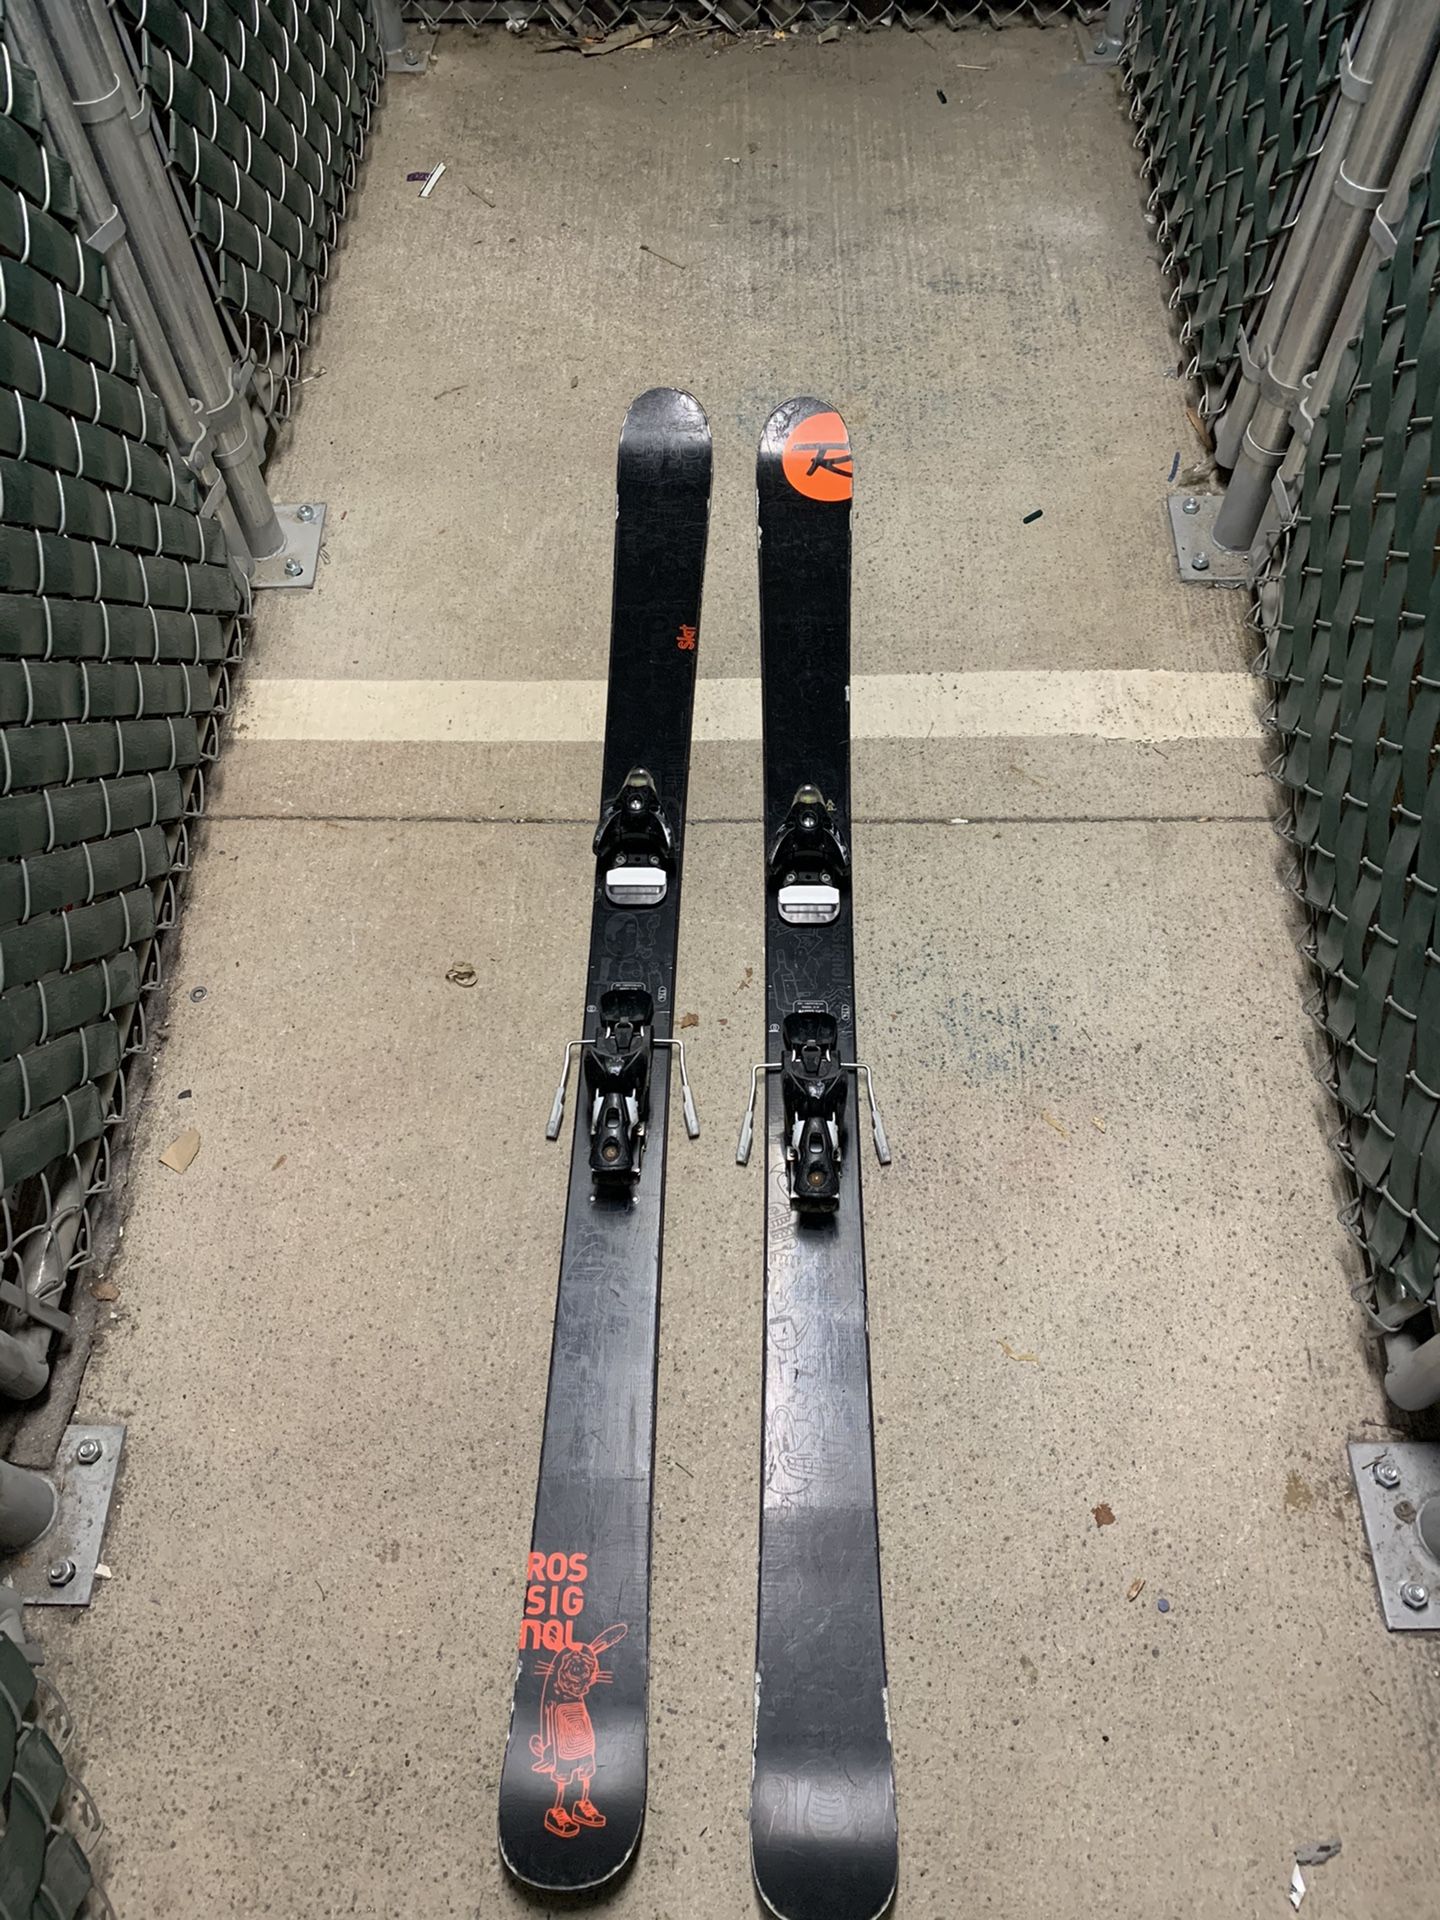 174 rossignol Slat park and rip sticks. Skis. W/ Salomon S16 bindings